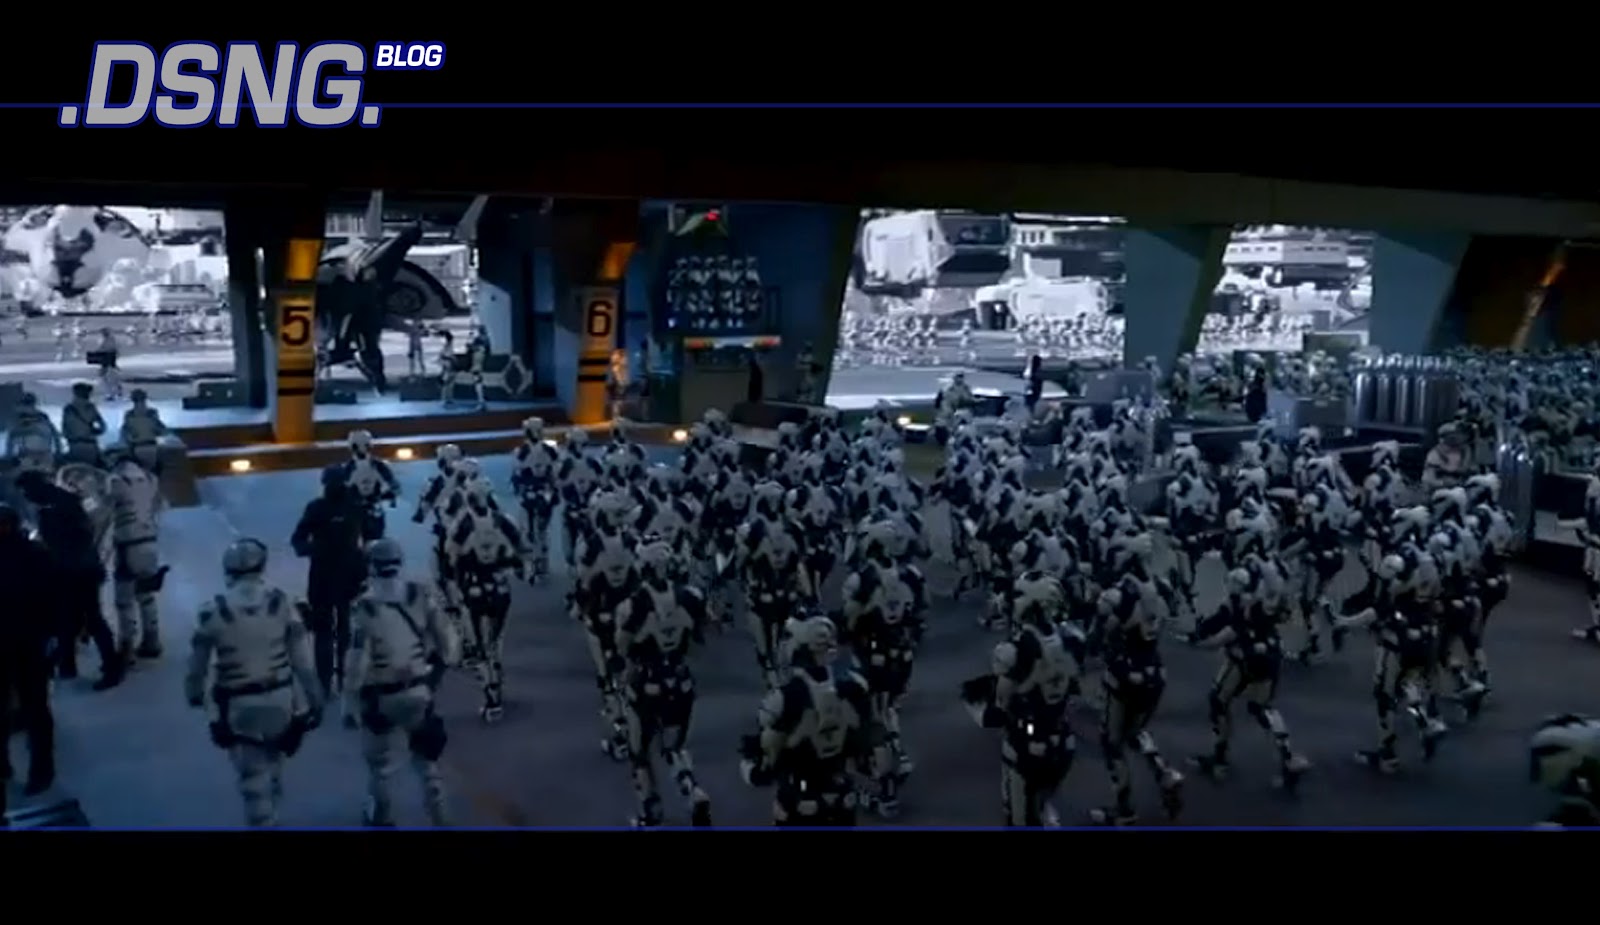 http://4.bp.blogspot.com/-5ovkpGWWvKw/T-4M9JVPJxI/AAAAAAAAGSk/Y6AHd_FtMRQ/s1600/colin+farrell+kate+beckinsale+total+recall+2012+movie+sci+fi+handgun+gun+weapon+concept+wallpaper++futuristic+hovercar+police+robot+droids+cyborgs+star+wars+clone+army.jpg